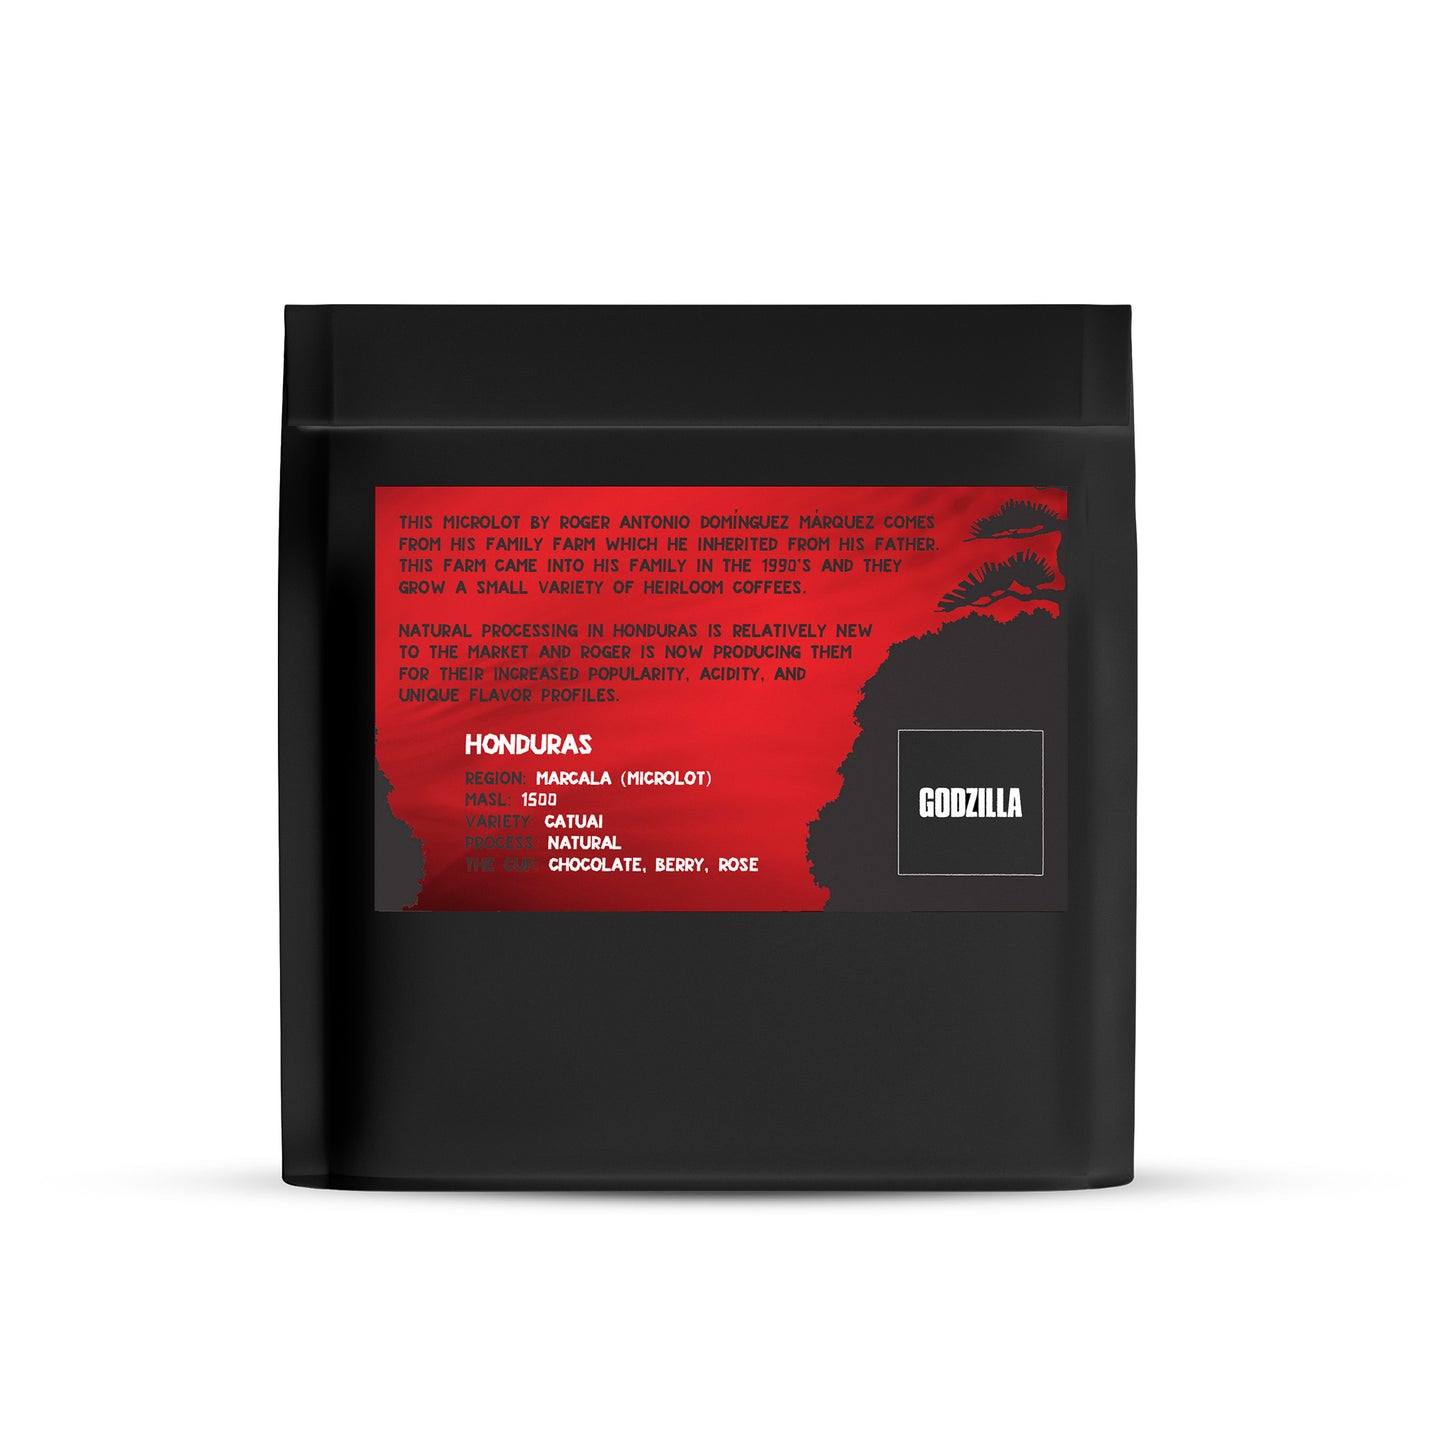 Godzilla Black Label Coffee 2-Pack